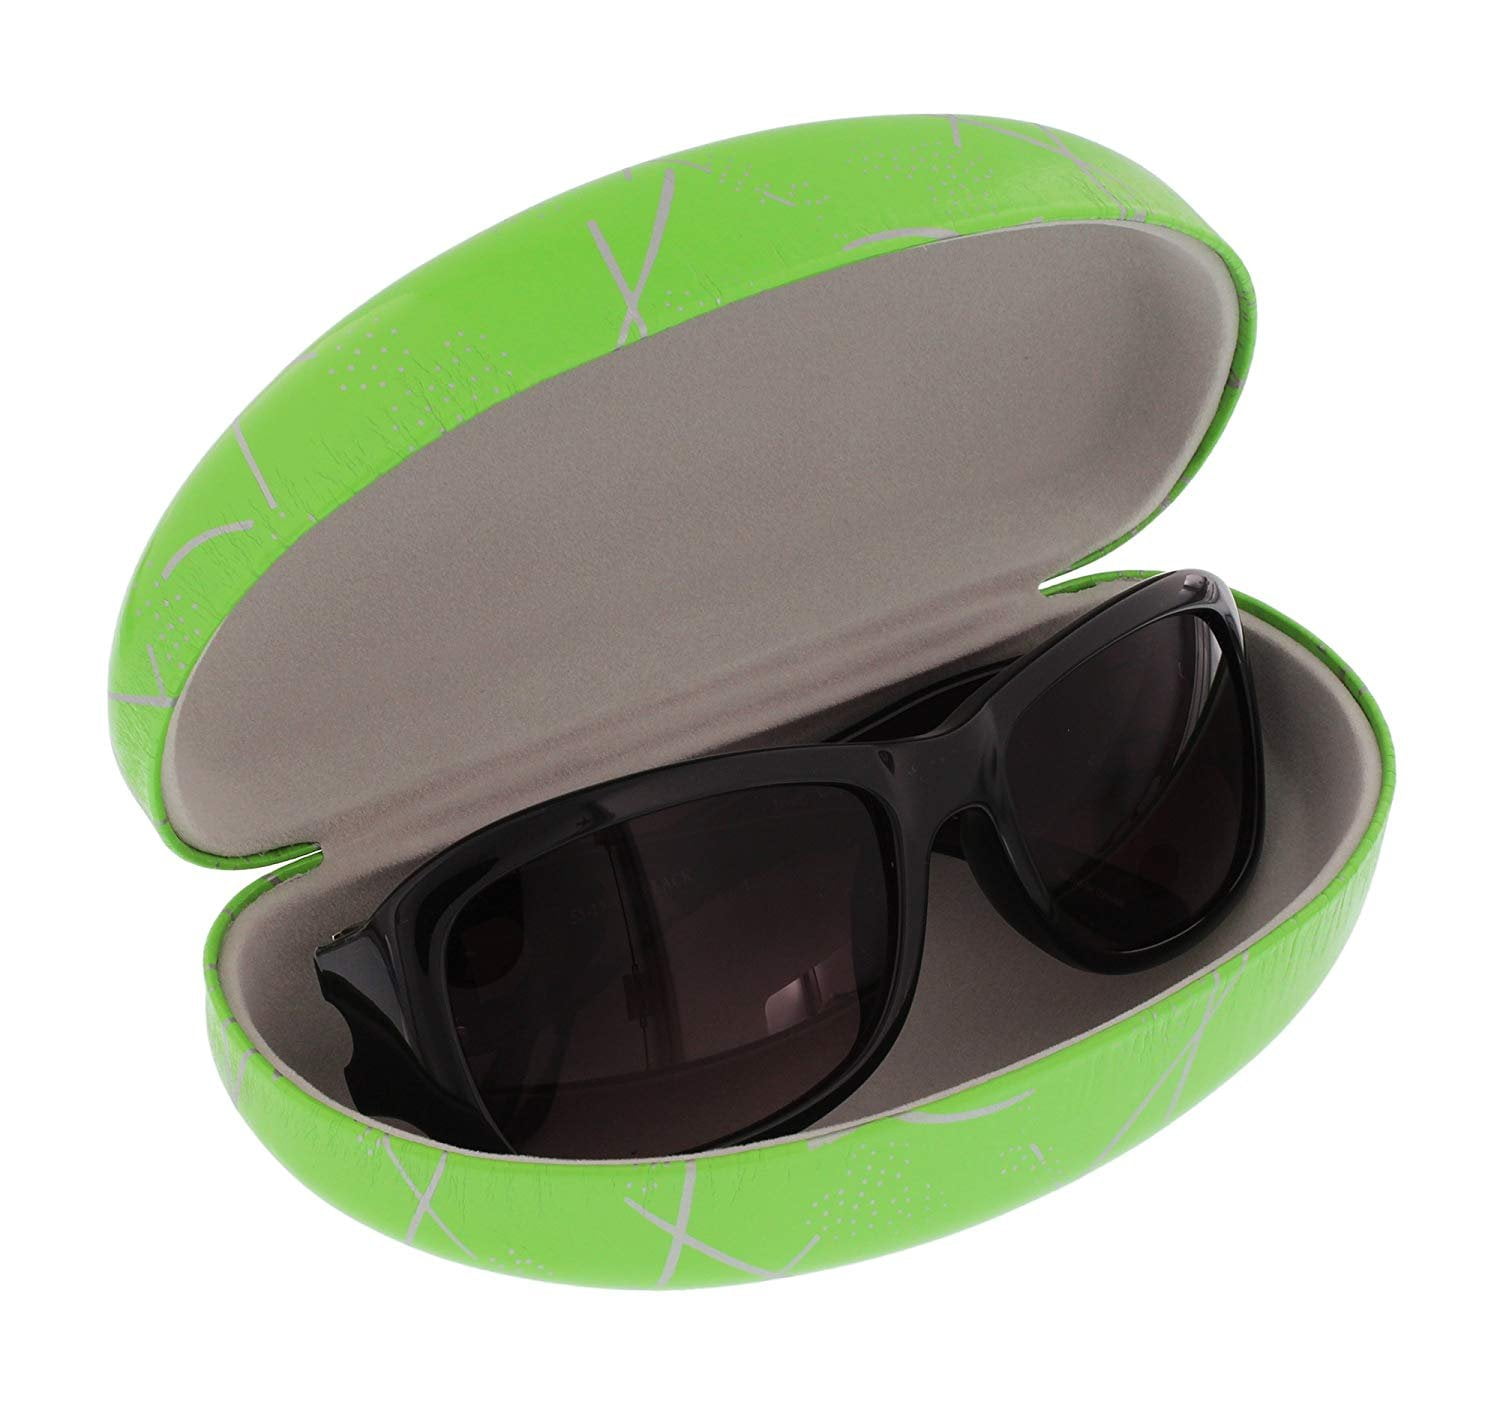 Extra Large Hard Glasses Case - Maximum Protection for Any Frame